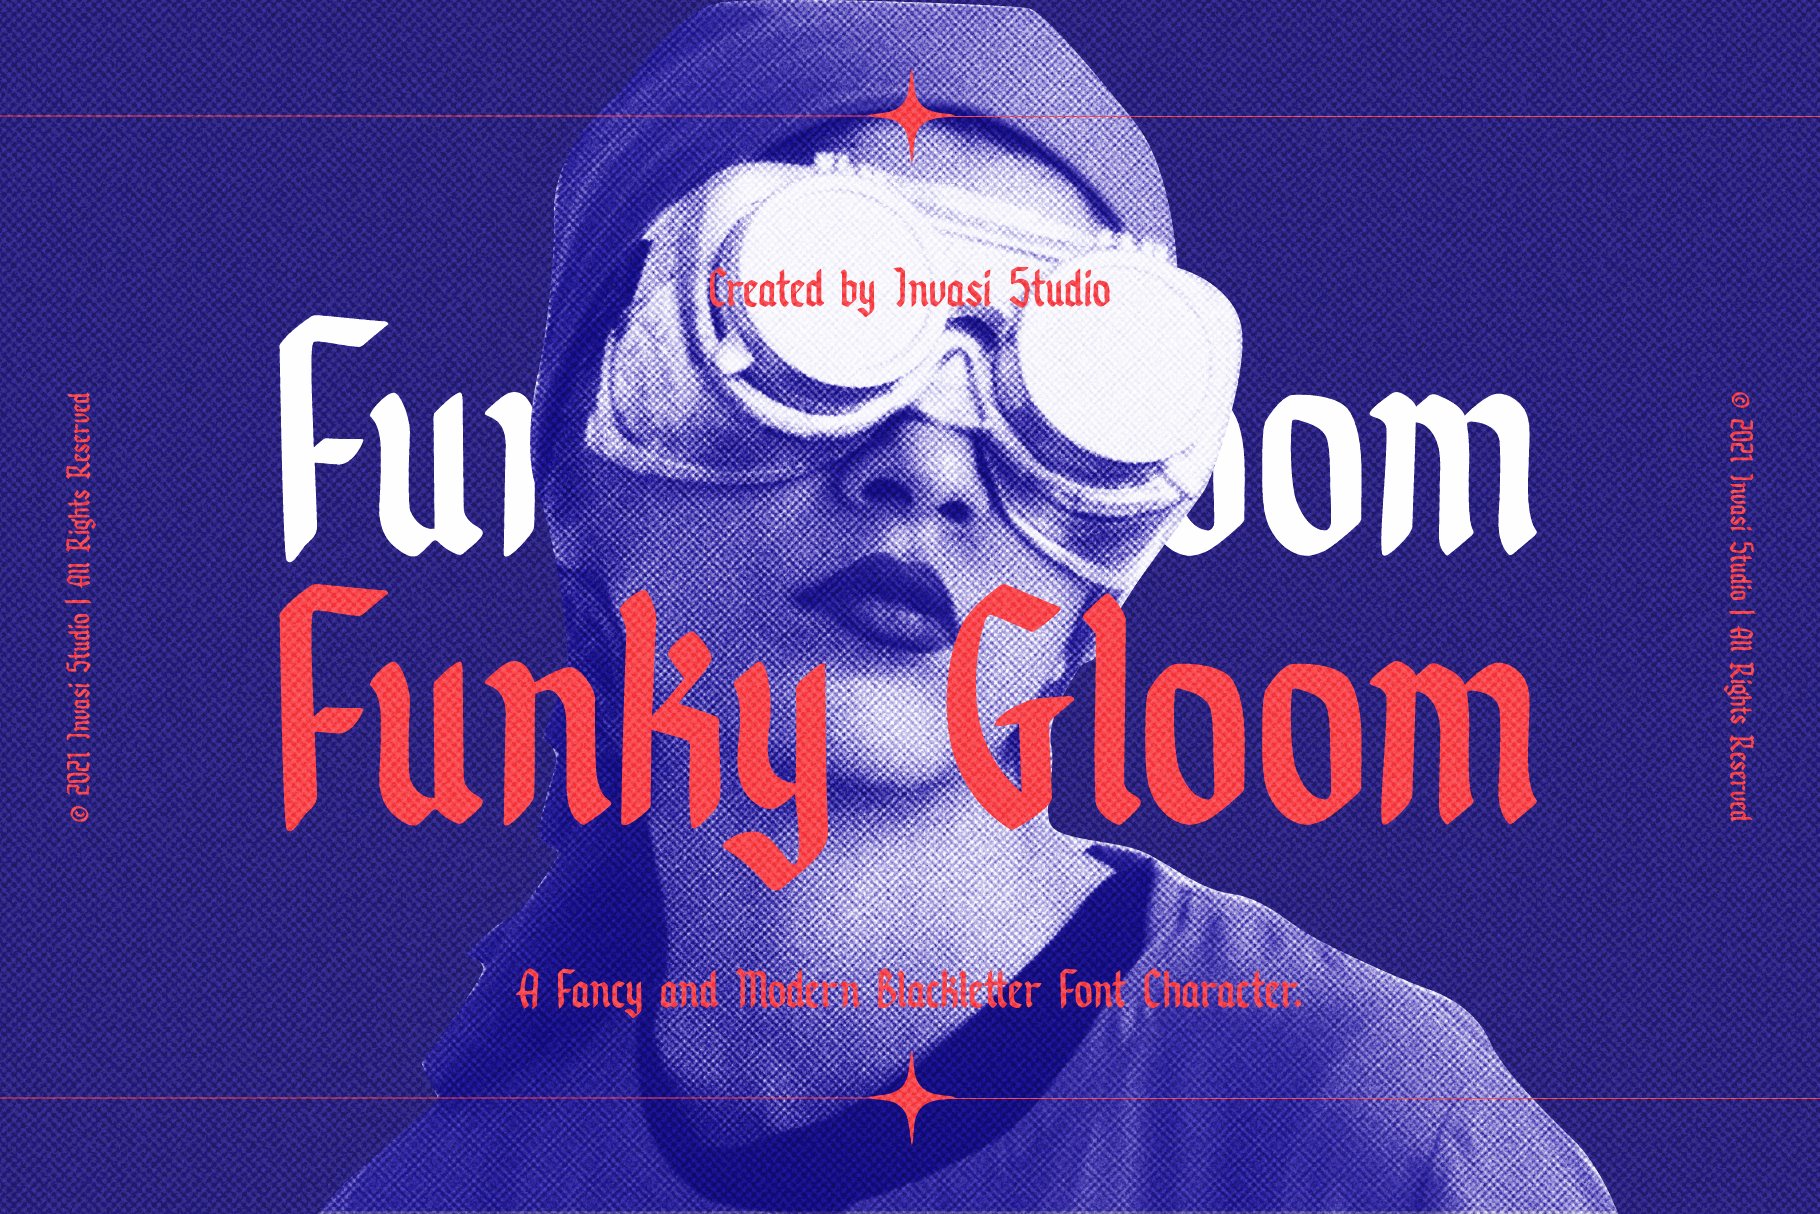 Funky Gloom - Fancy Blackletter cover image.